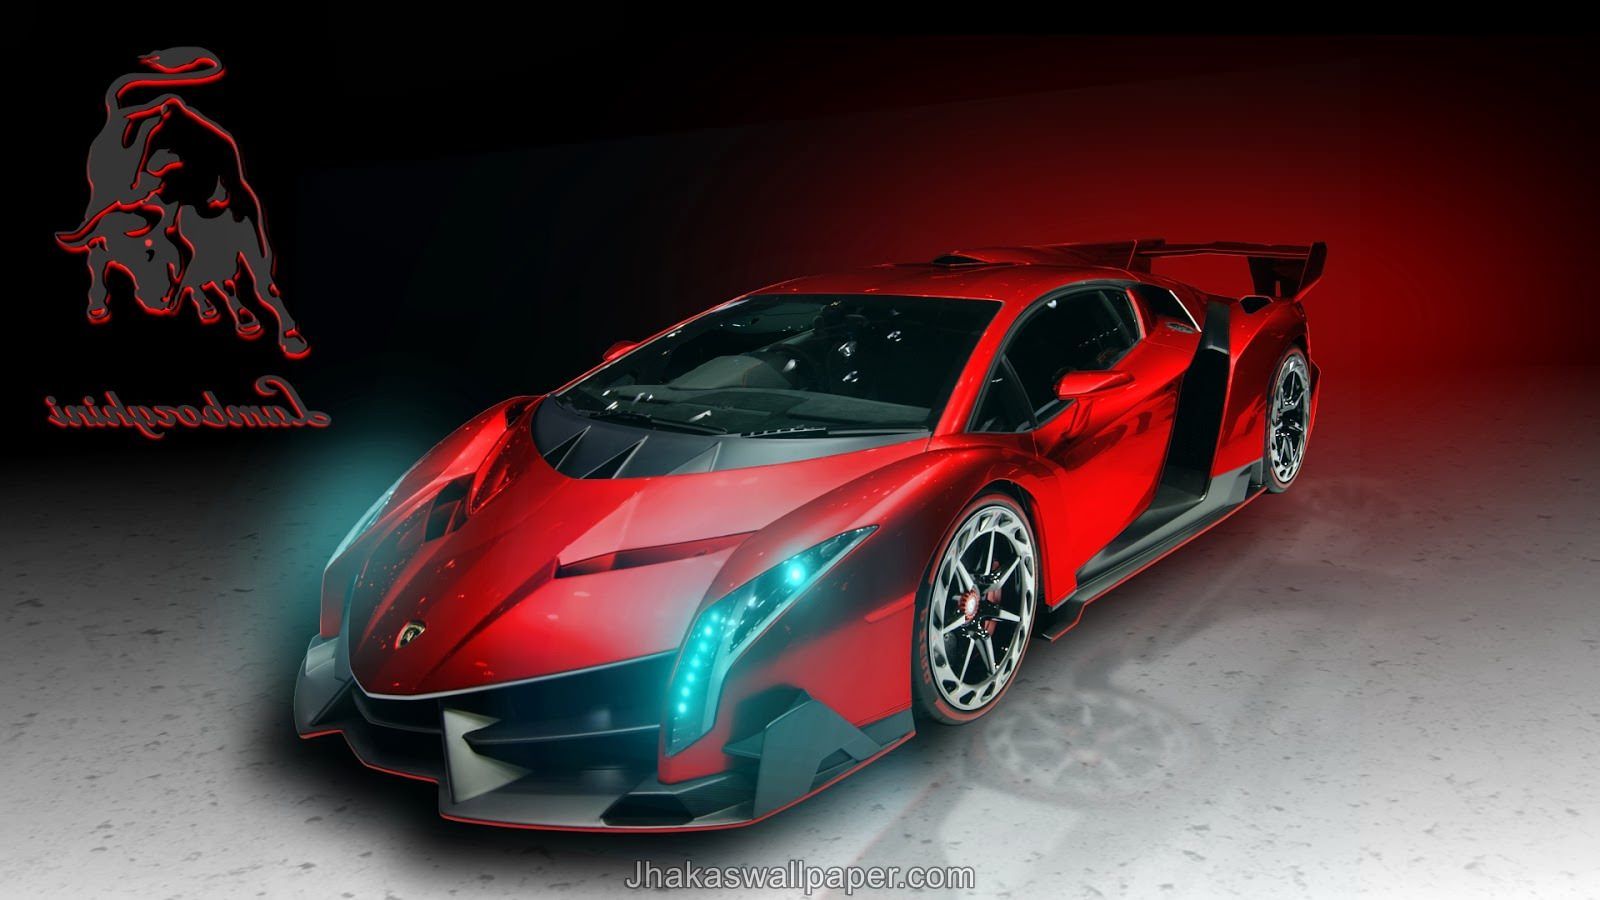 Lamborghini Veneno Roadster Animated Wallpapers | Jhakaswallpaper.com